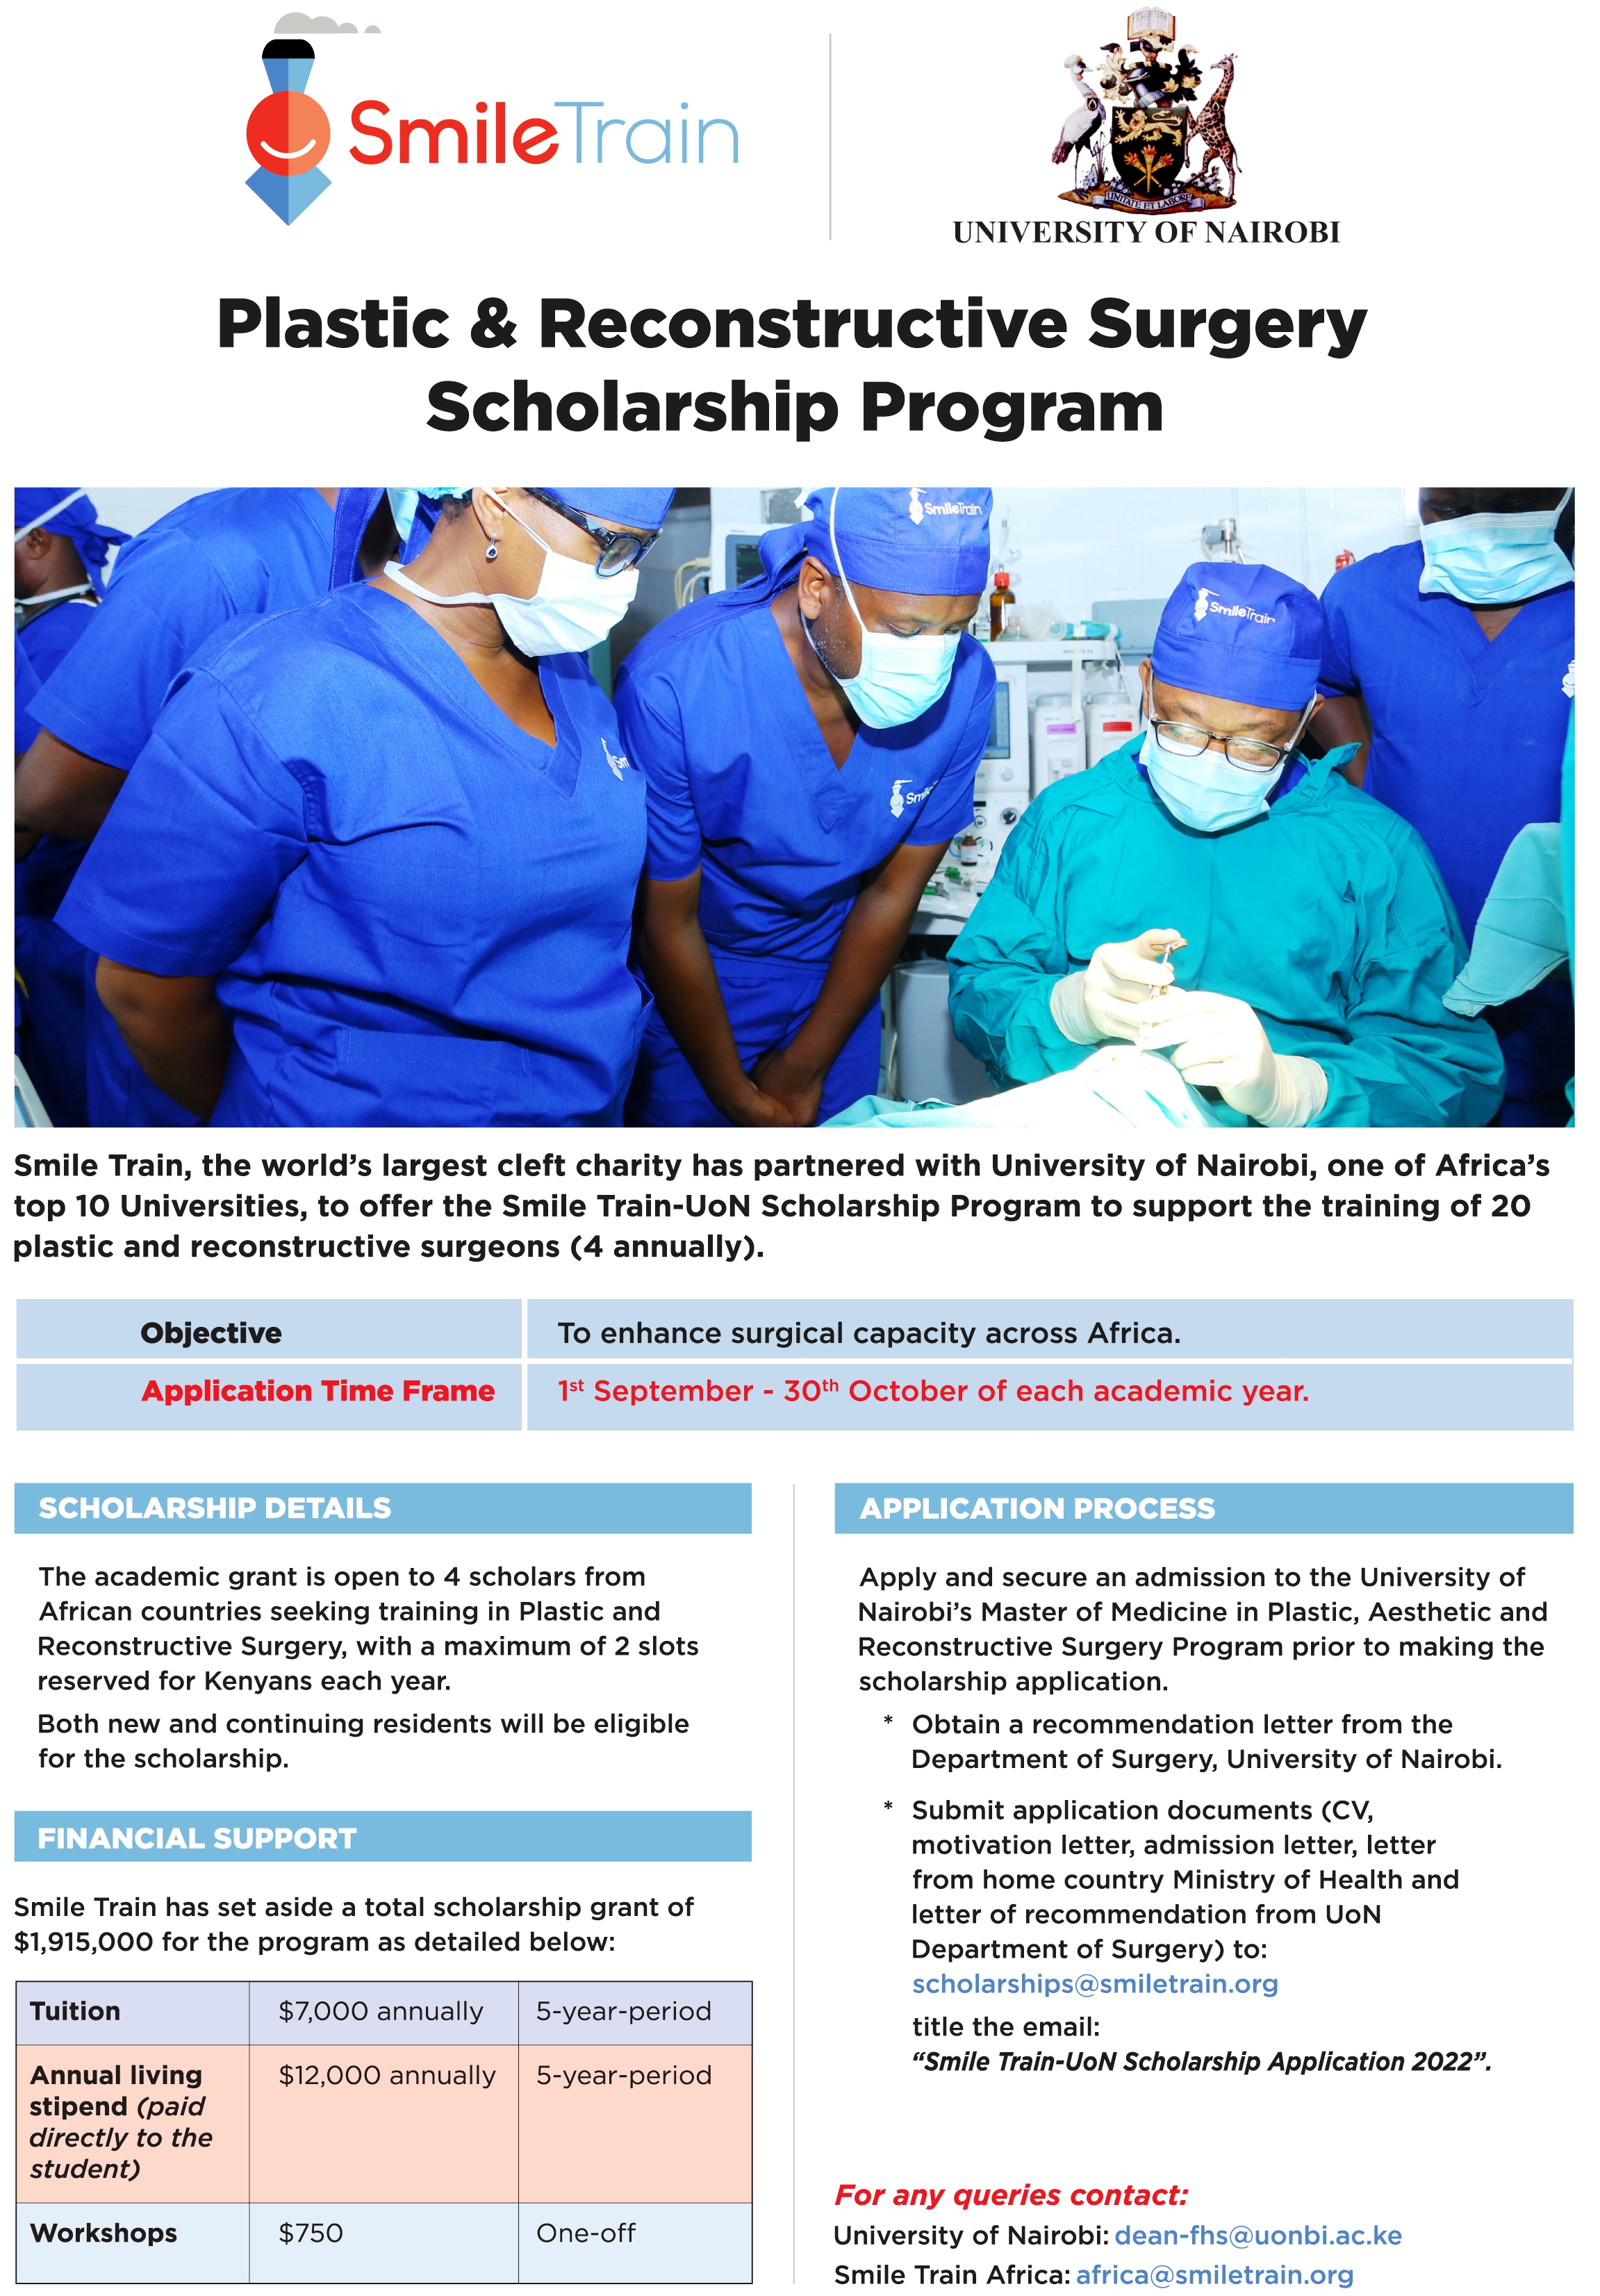 Plastic and reconstructive surgery scholarship program poster.